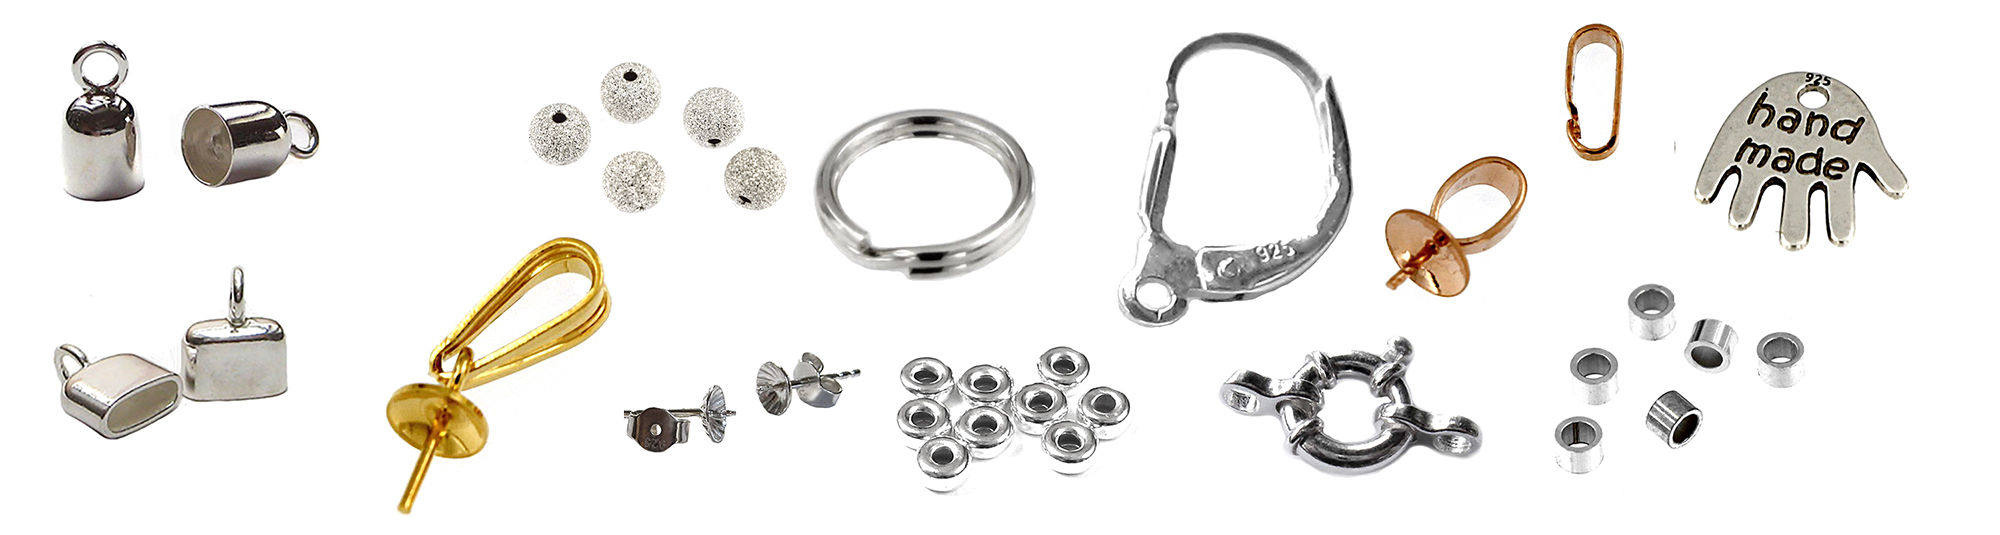 SG-Schmuck - Jewelry Accessories 925 Sterling Silver - Jewelry Accessories Gold - Jewelry Supplies